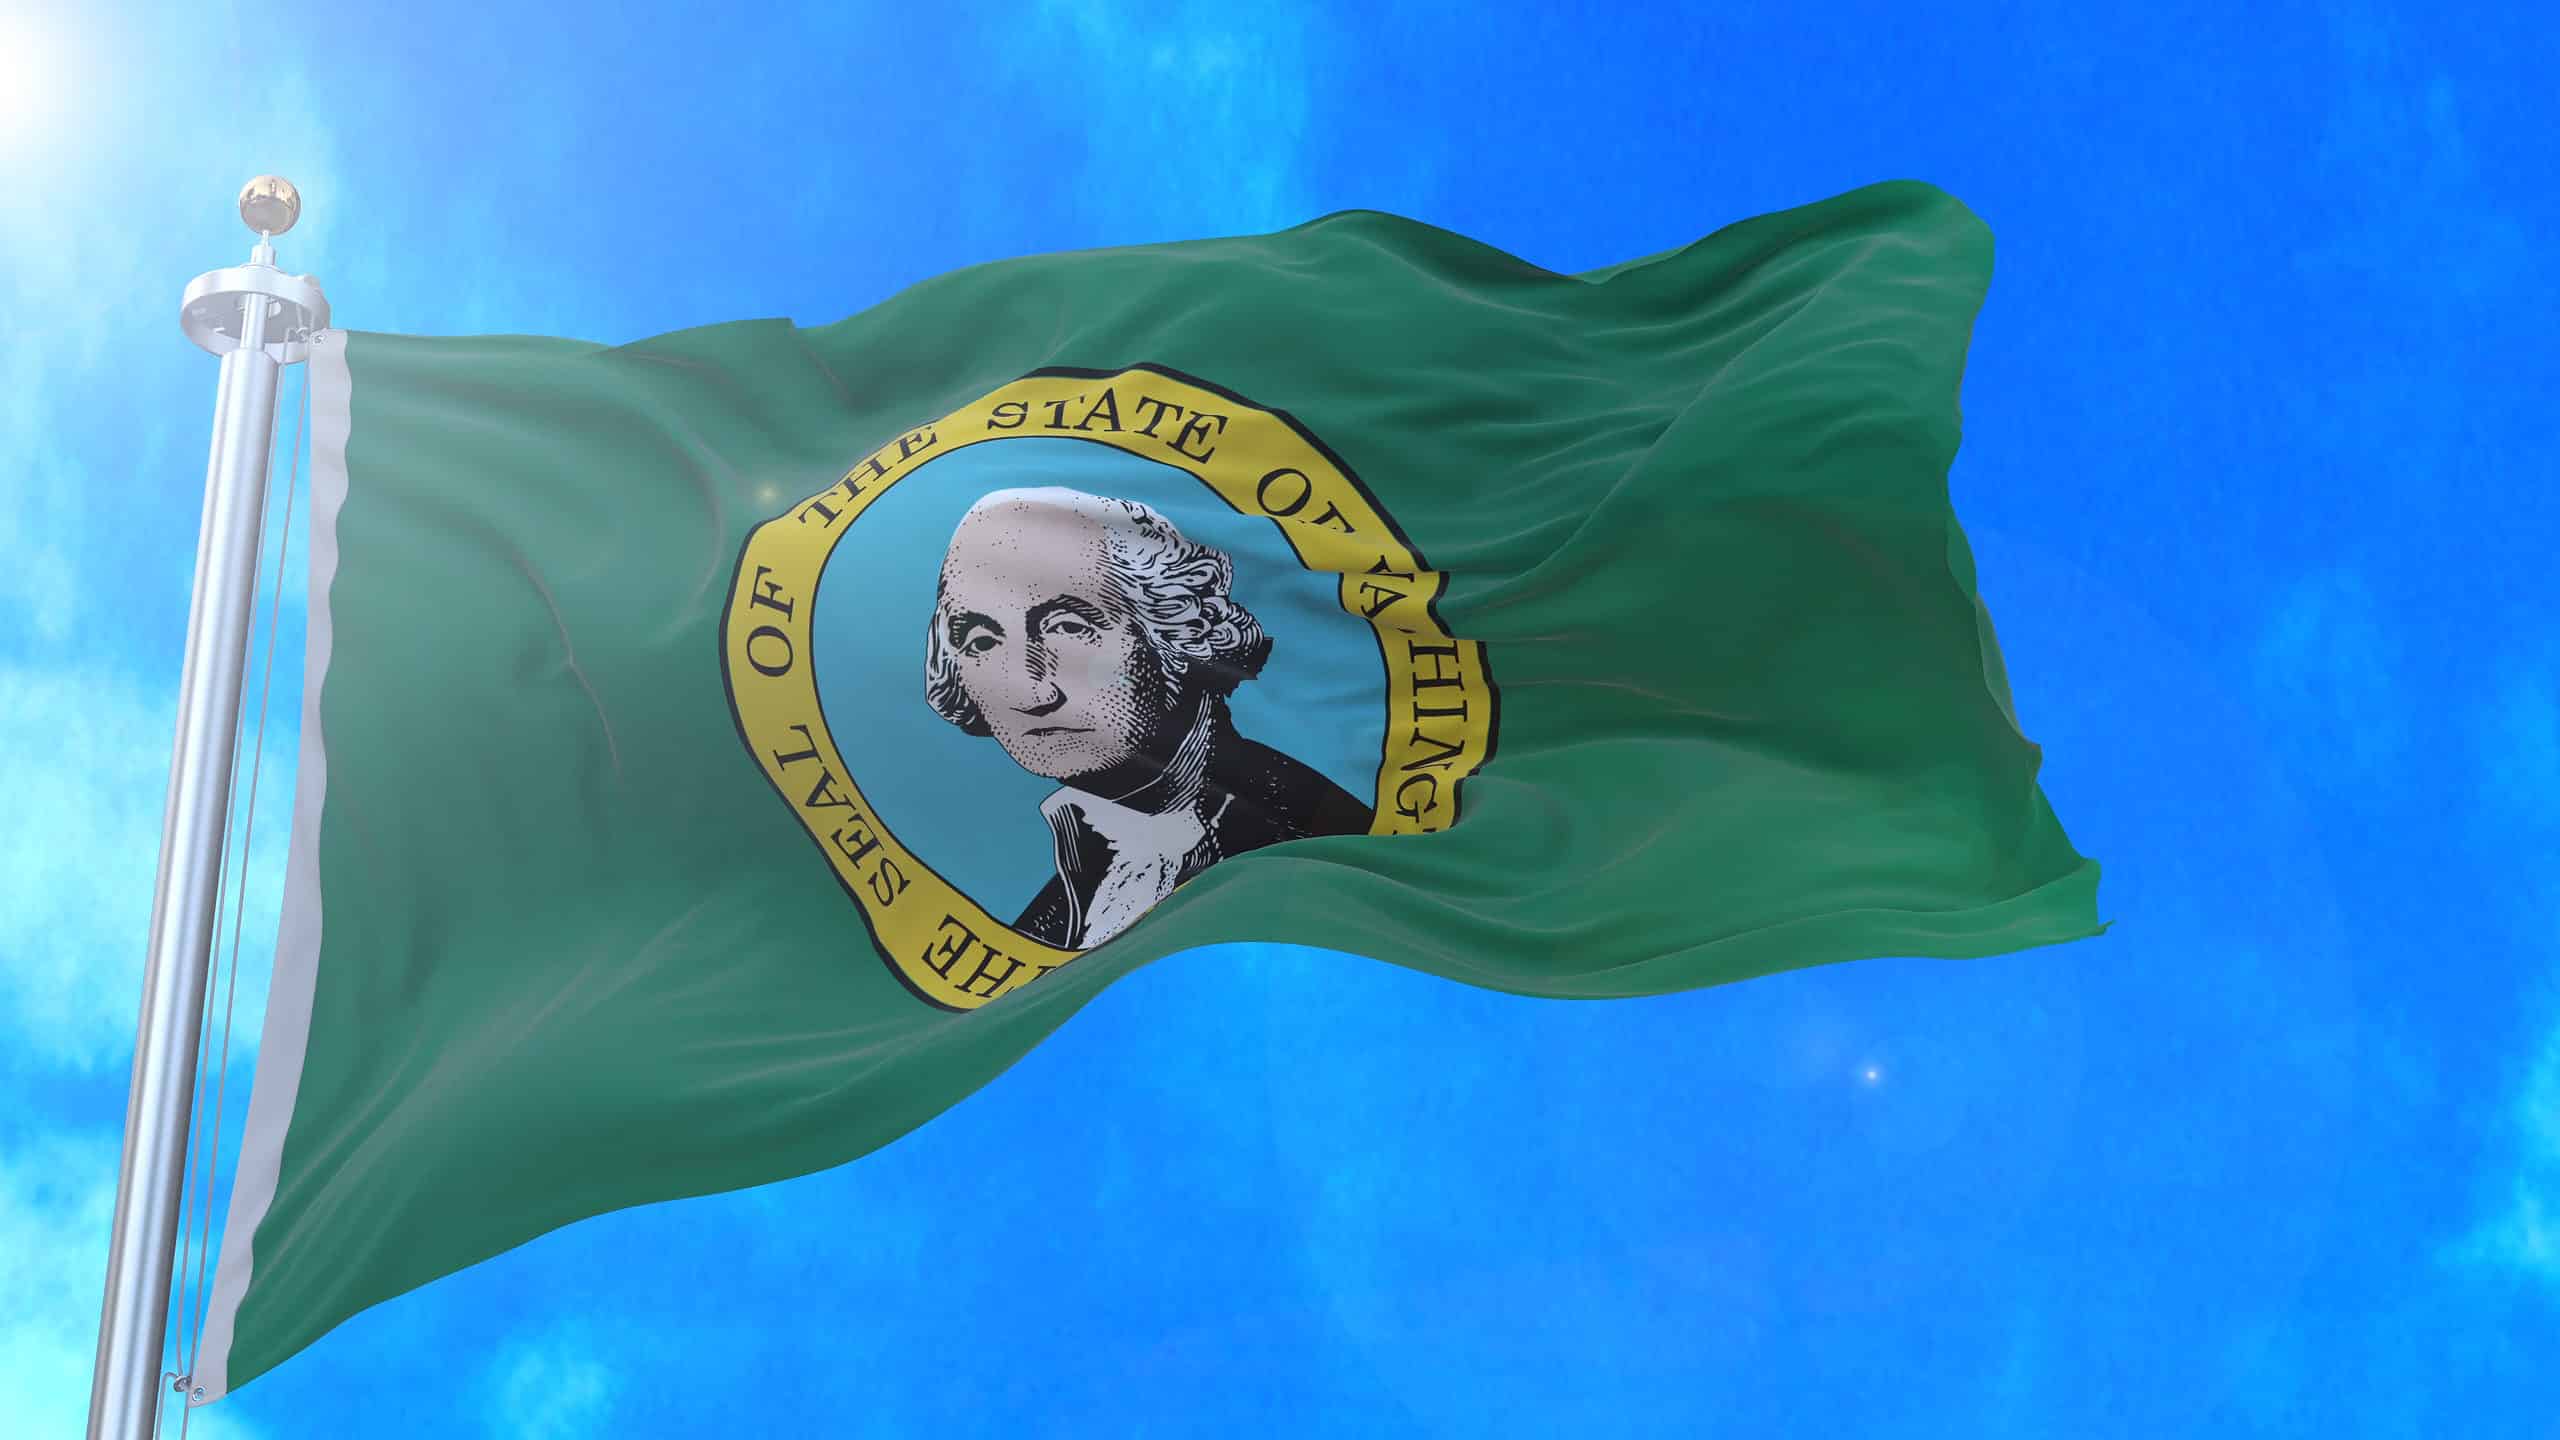 The state flag of Washington